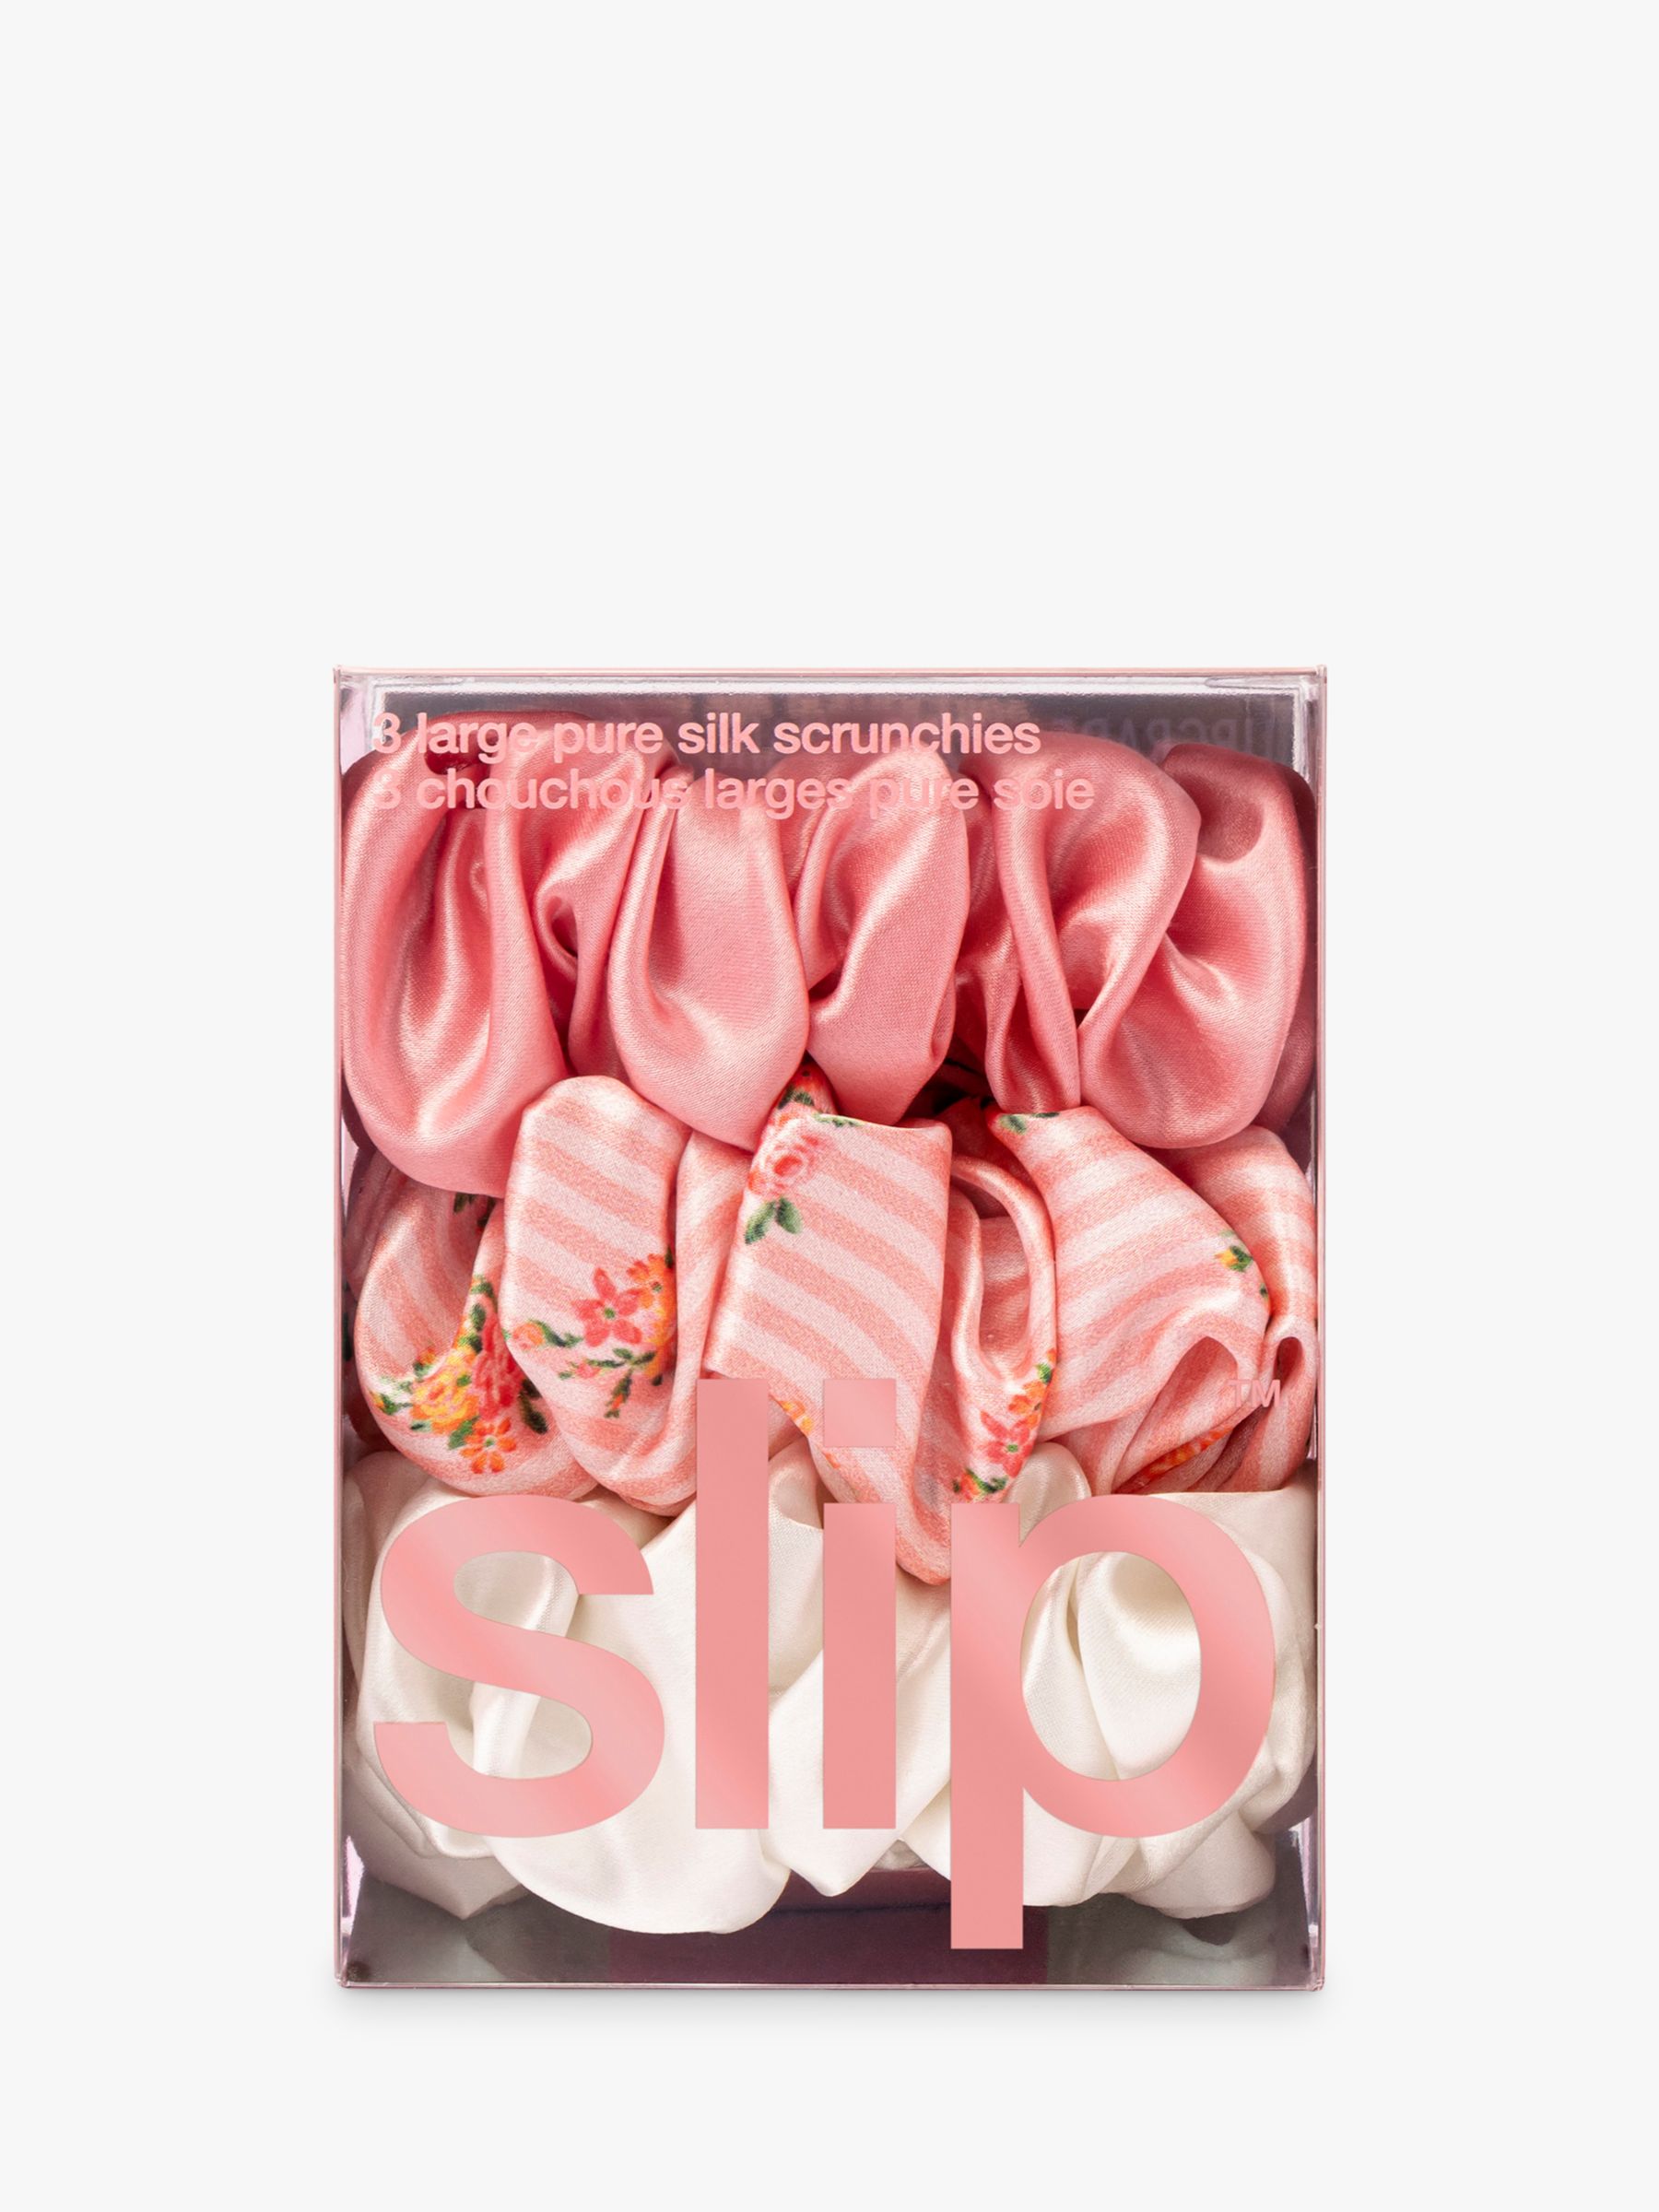 Buy Slip® Large Silk Scrunchies, Pack of 3 Online at johnlewis.com